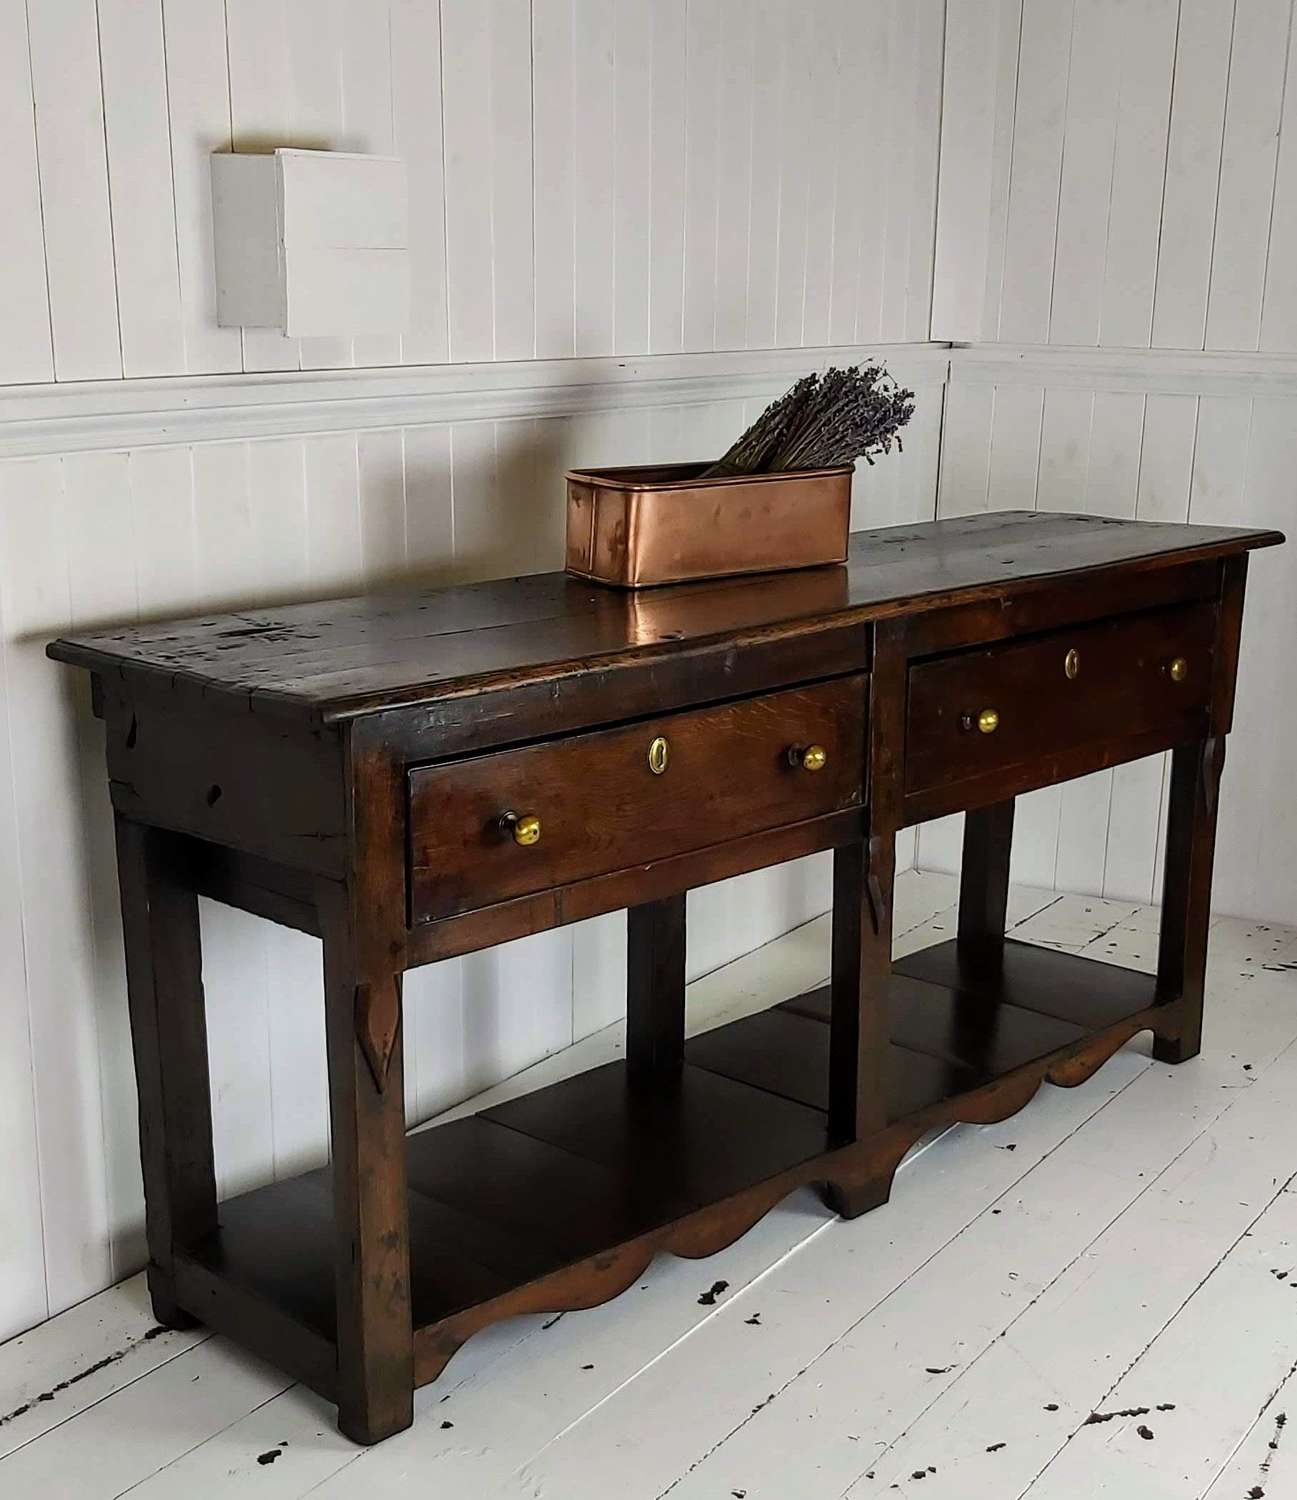 18th century Oak potboard dresser base